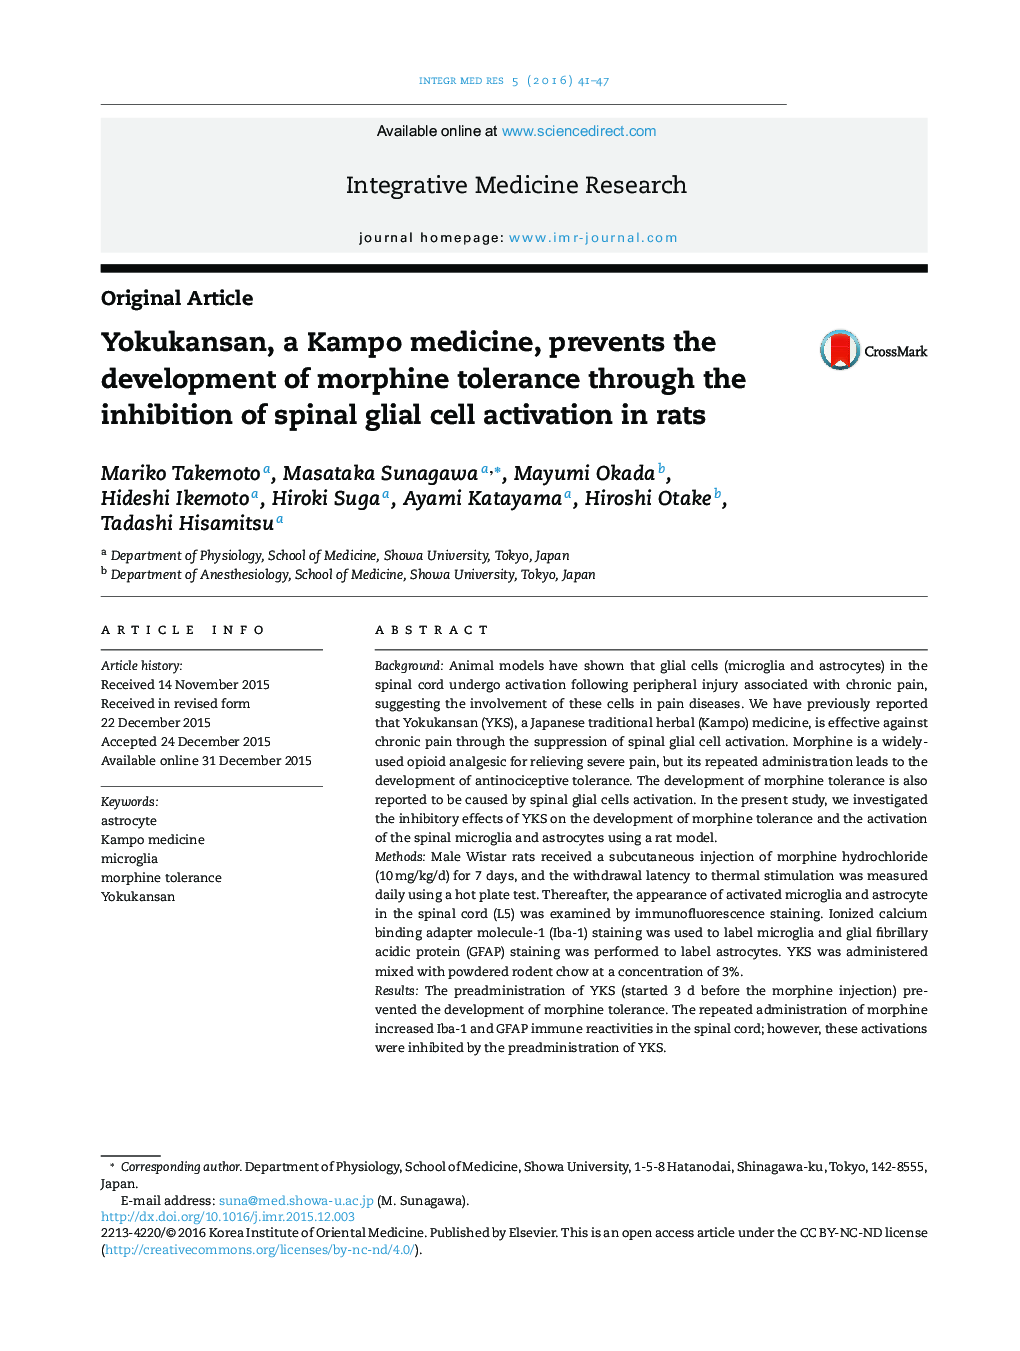 Yokukansan، پزشکی Kampo، مانع از توسعه تحمل نسبت به مرفین از طریق مهار فعال شدن سلول های گلیال نخاعی در موش می شود